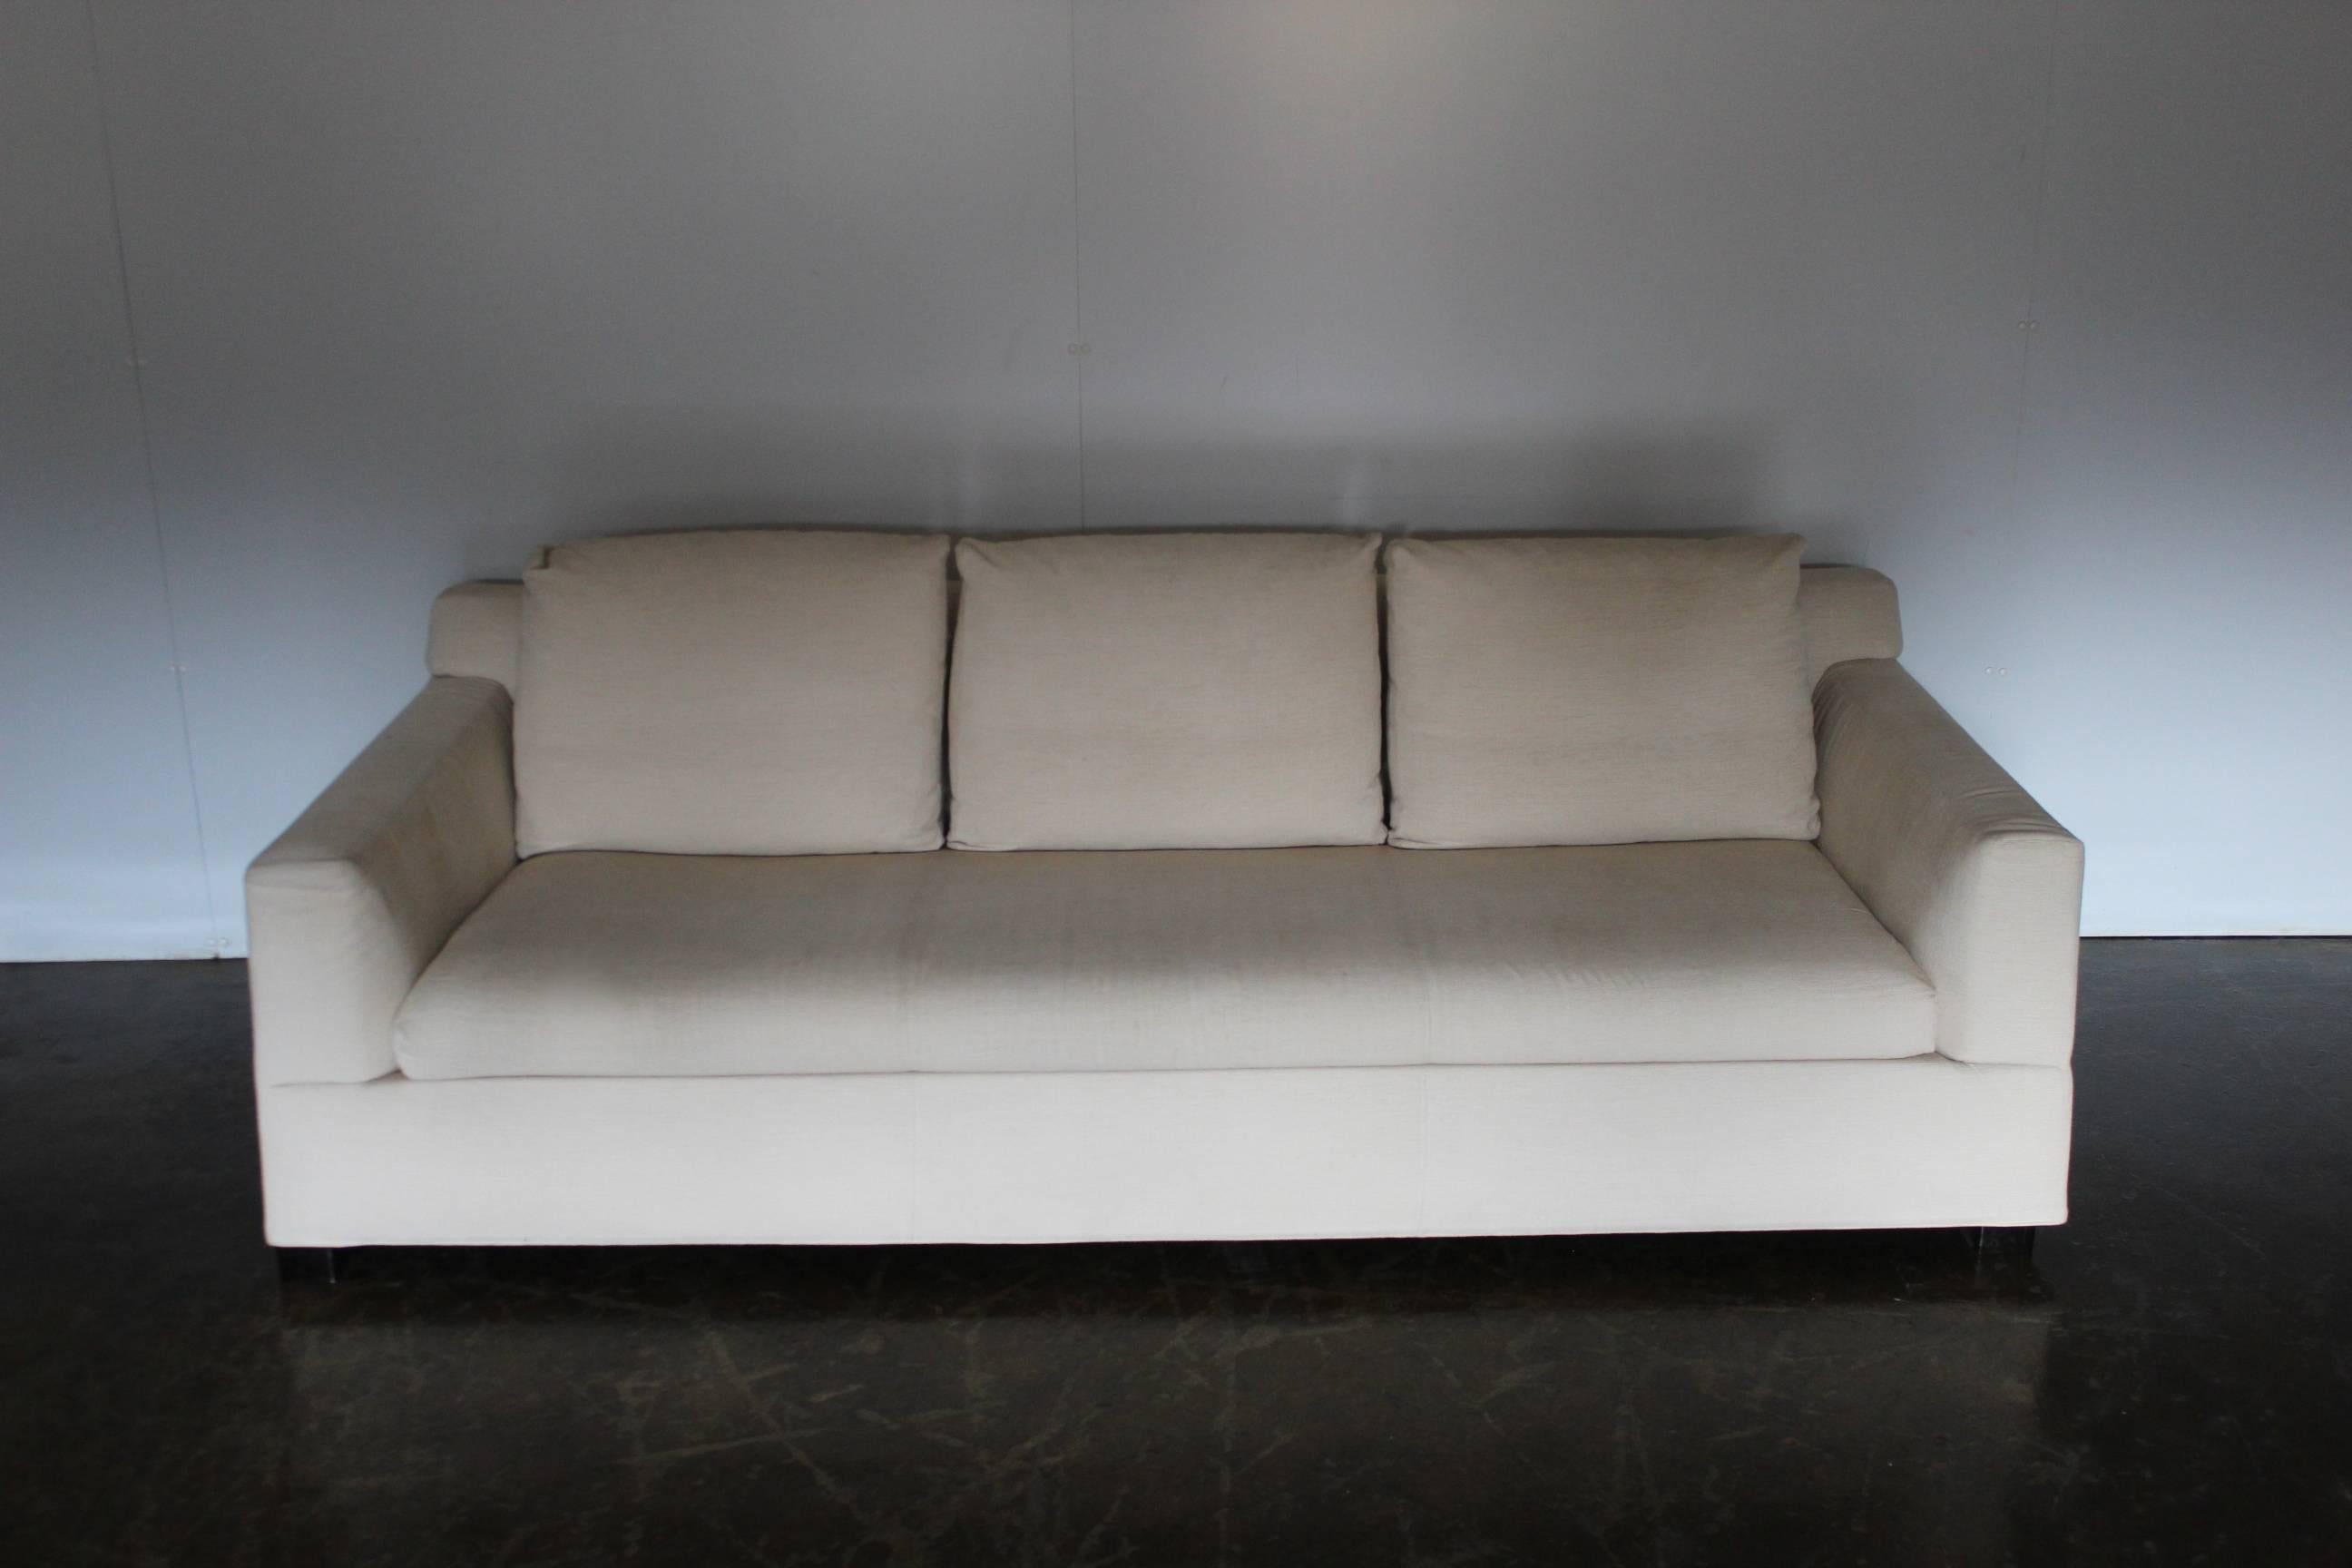 Italian Minotti “Gilbert” Three-Seat Sofa in Neutral Cream “Corda” Fabric